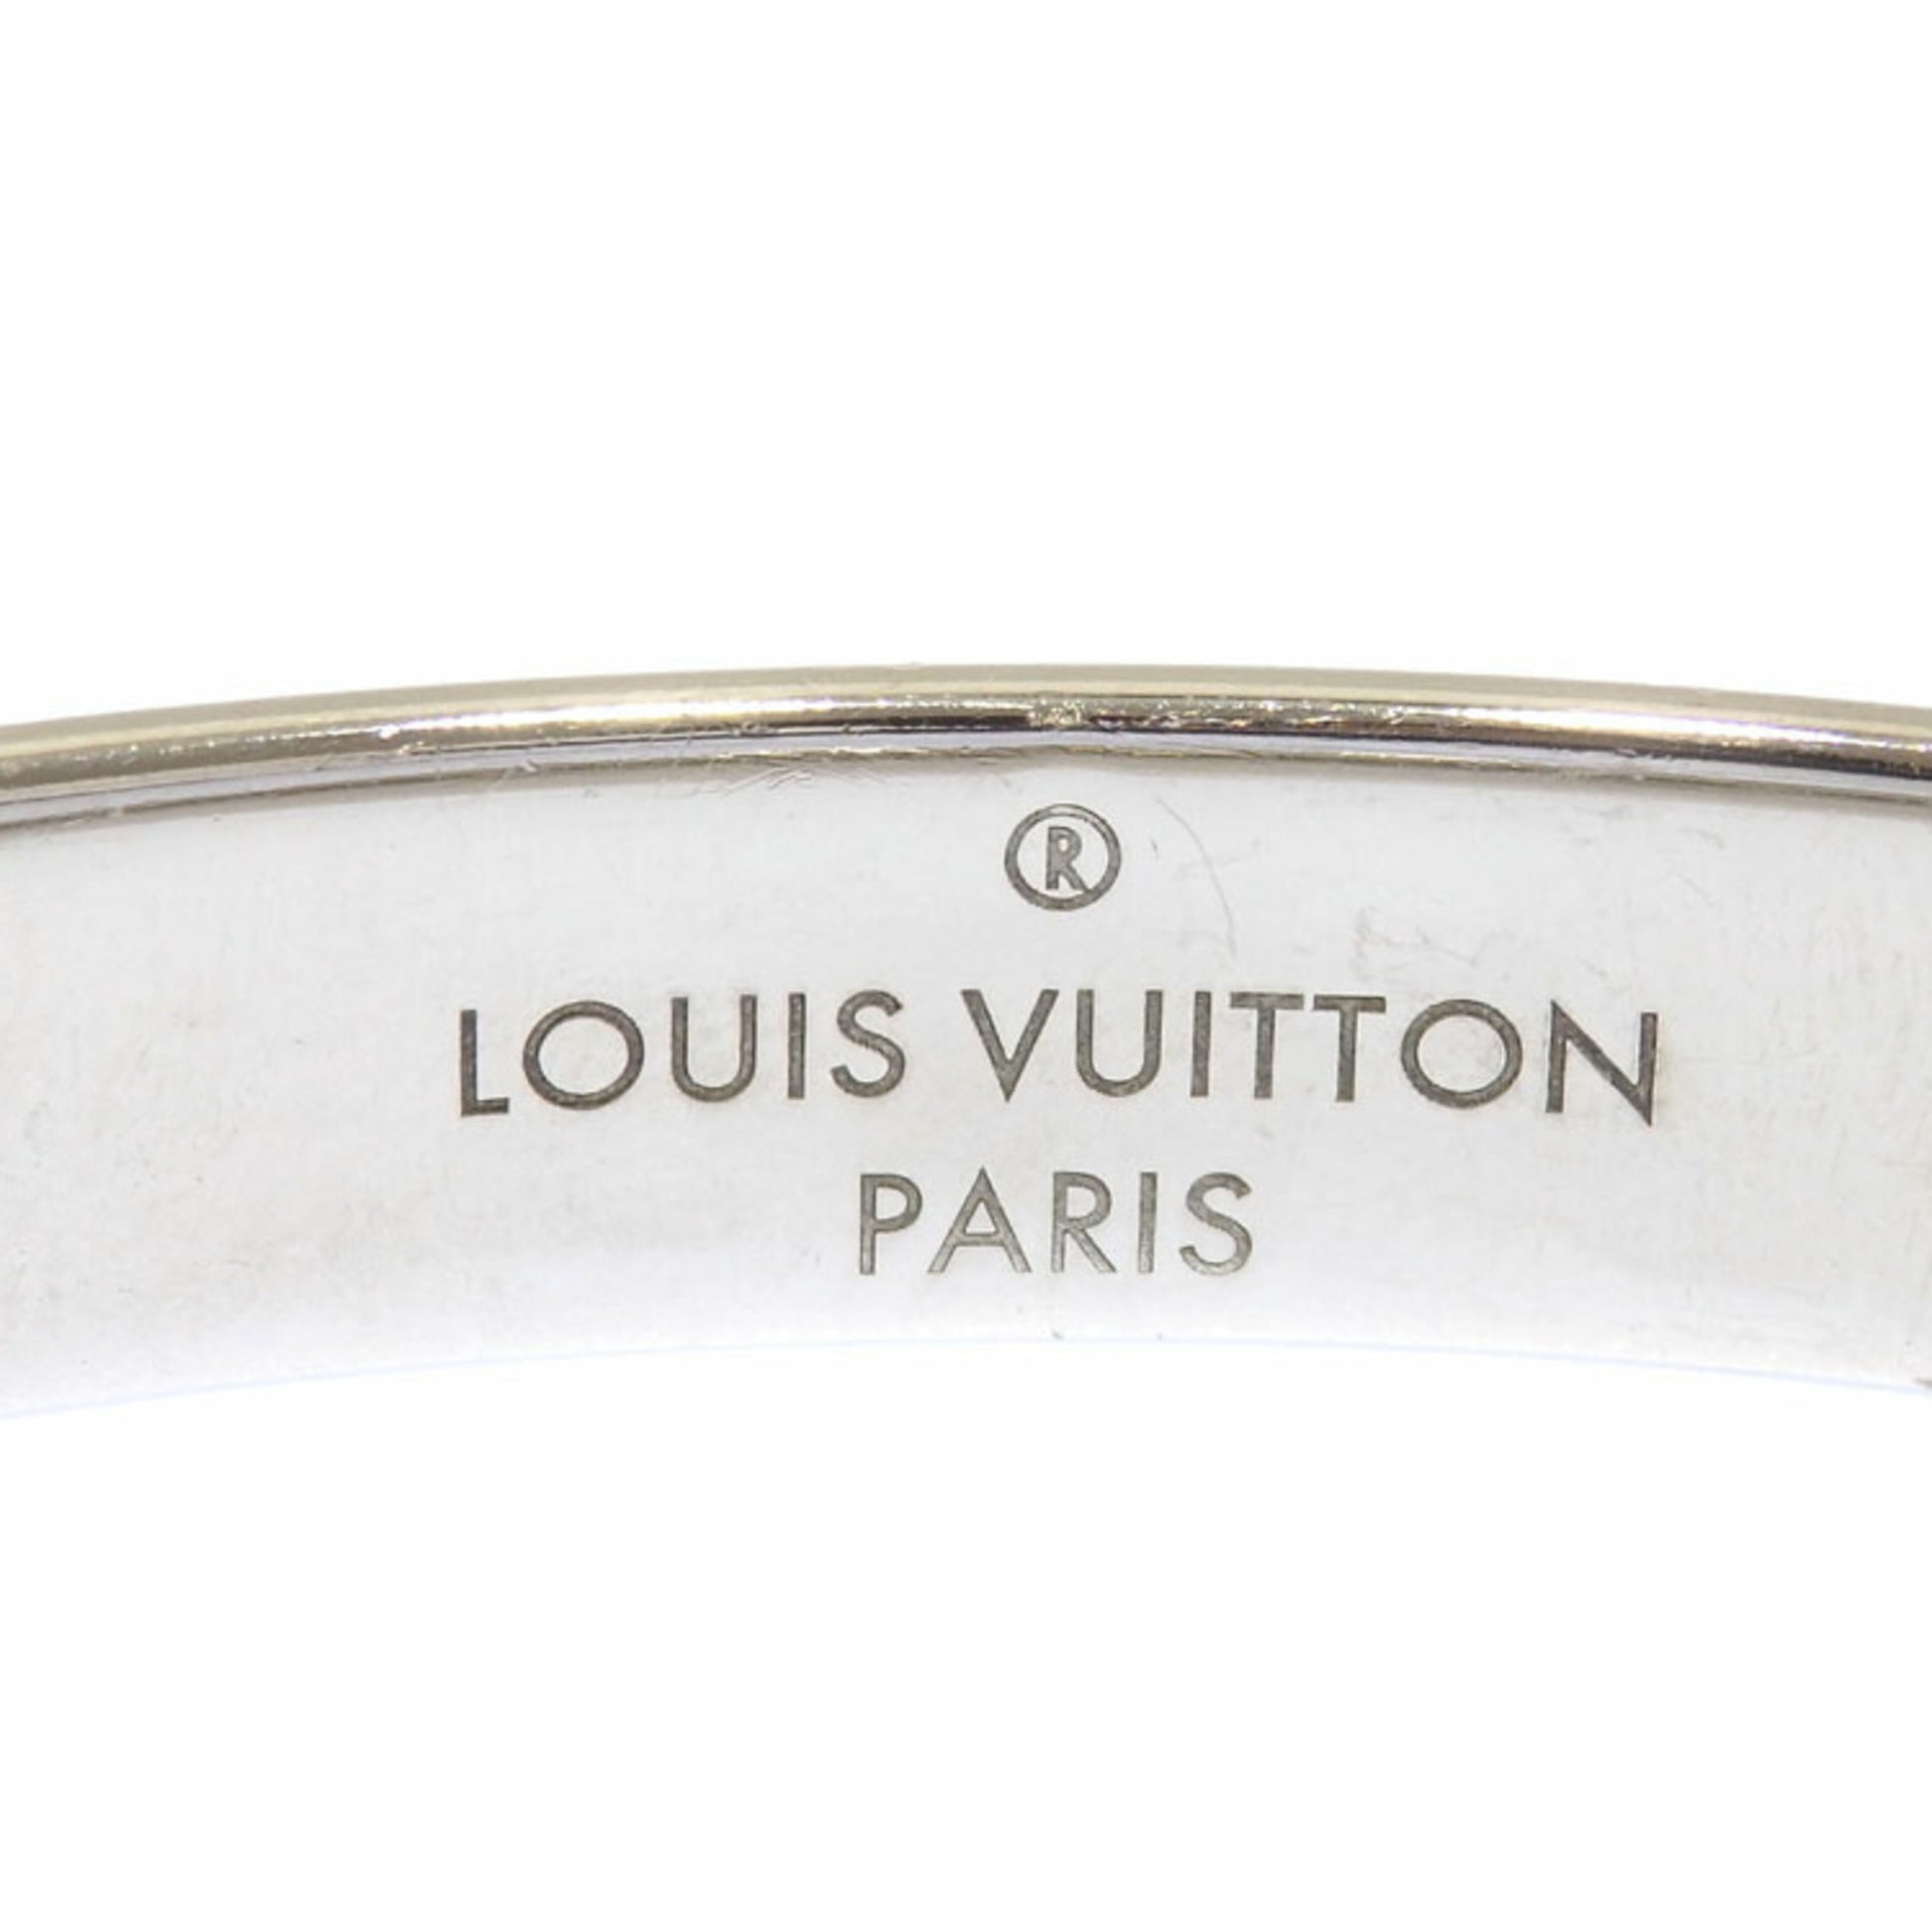 Shop Louis Vuitton Nanogram cuff (M64840, M64839) by lufine